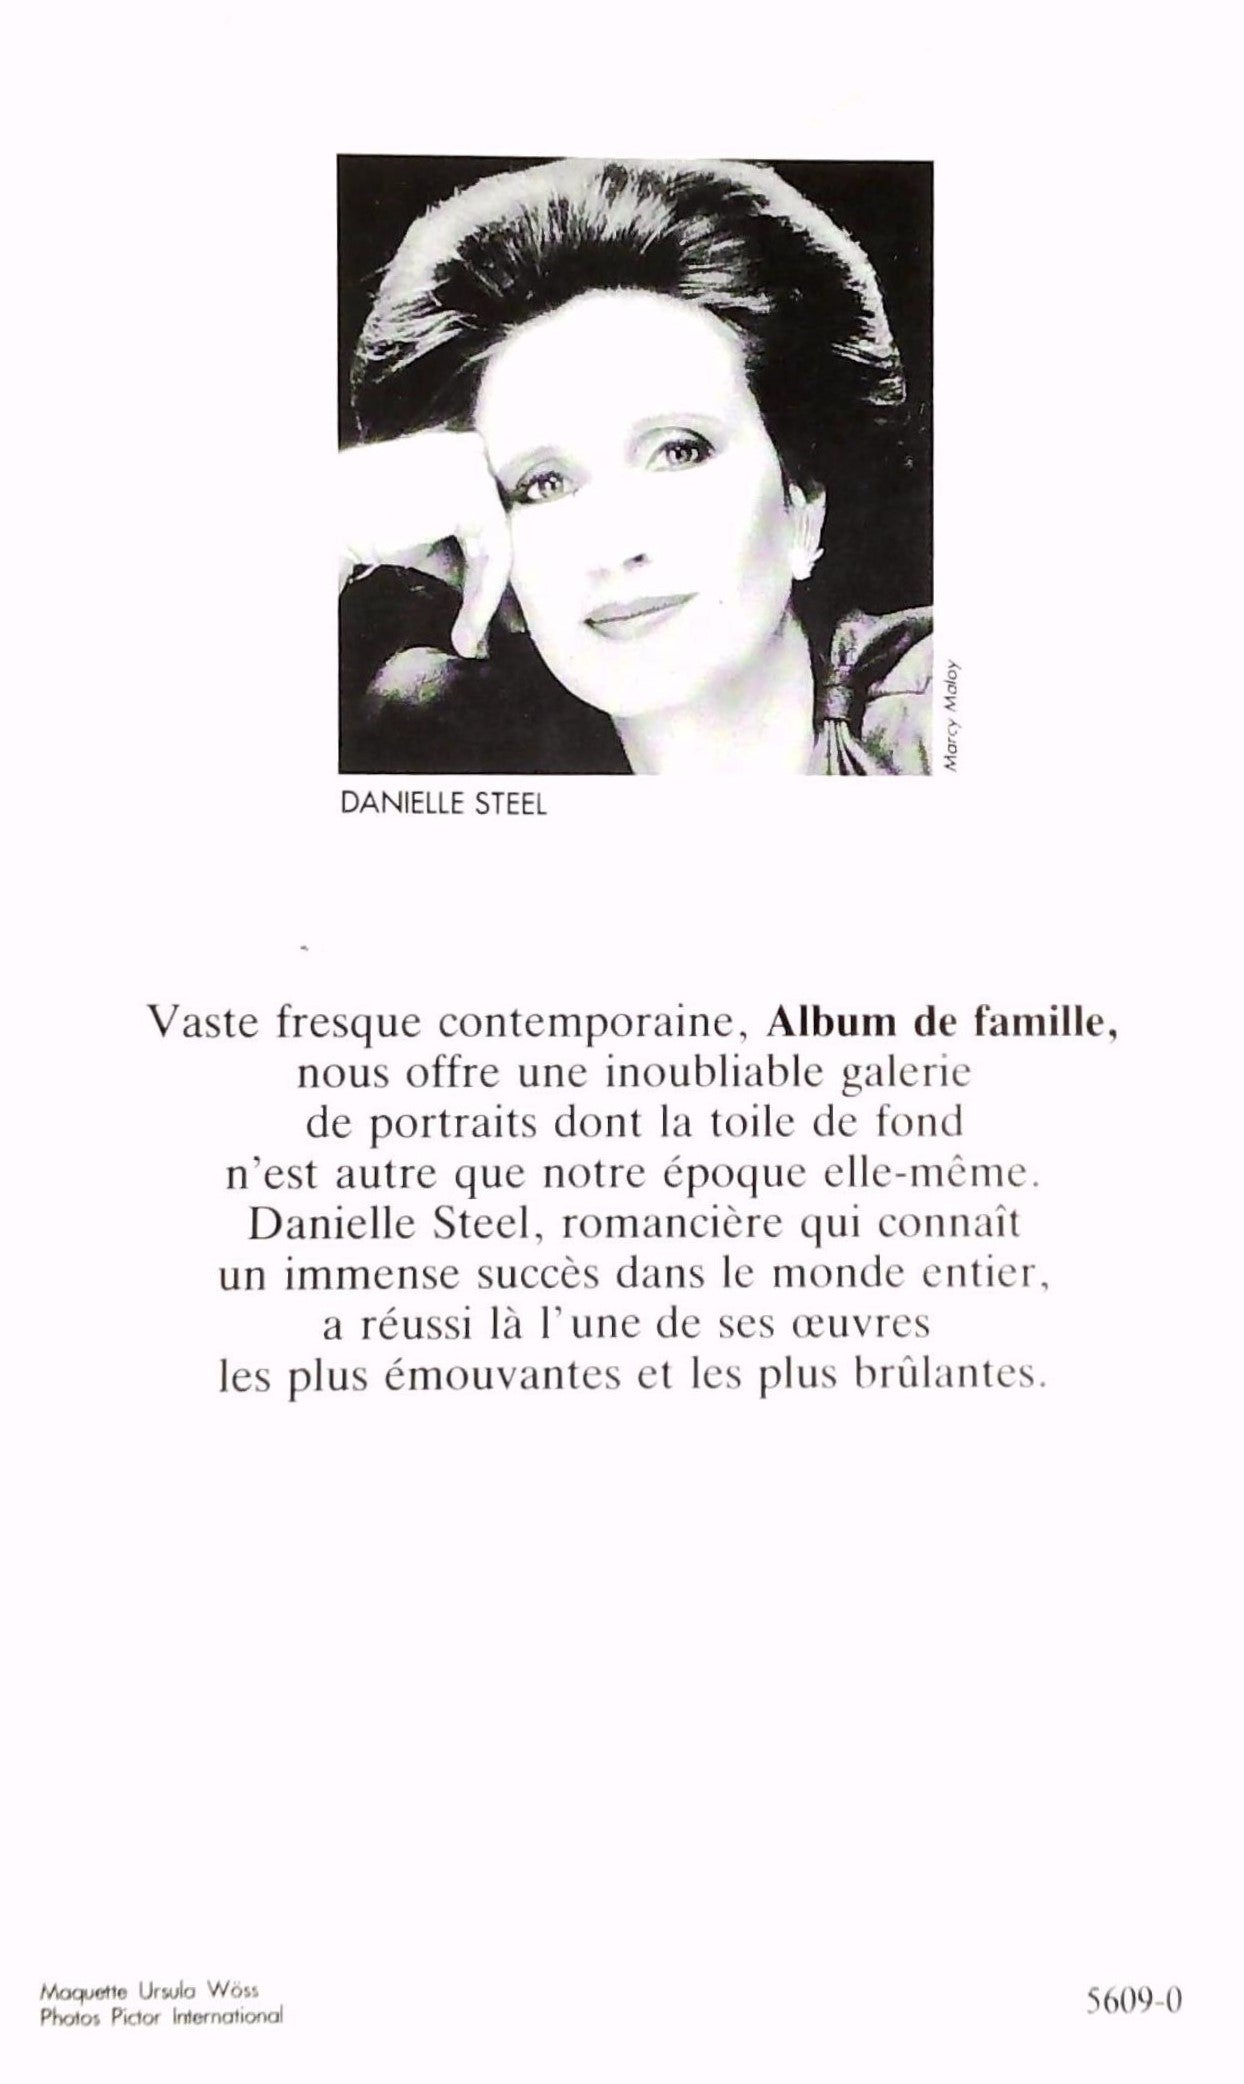 Album de famille (Danielle Steel)